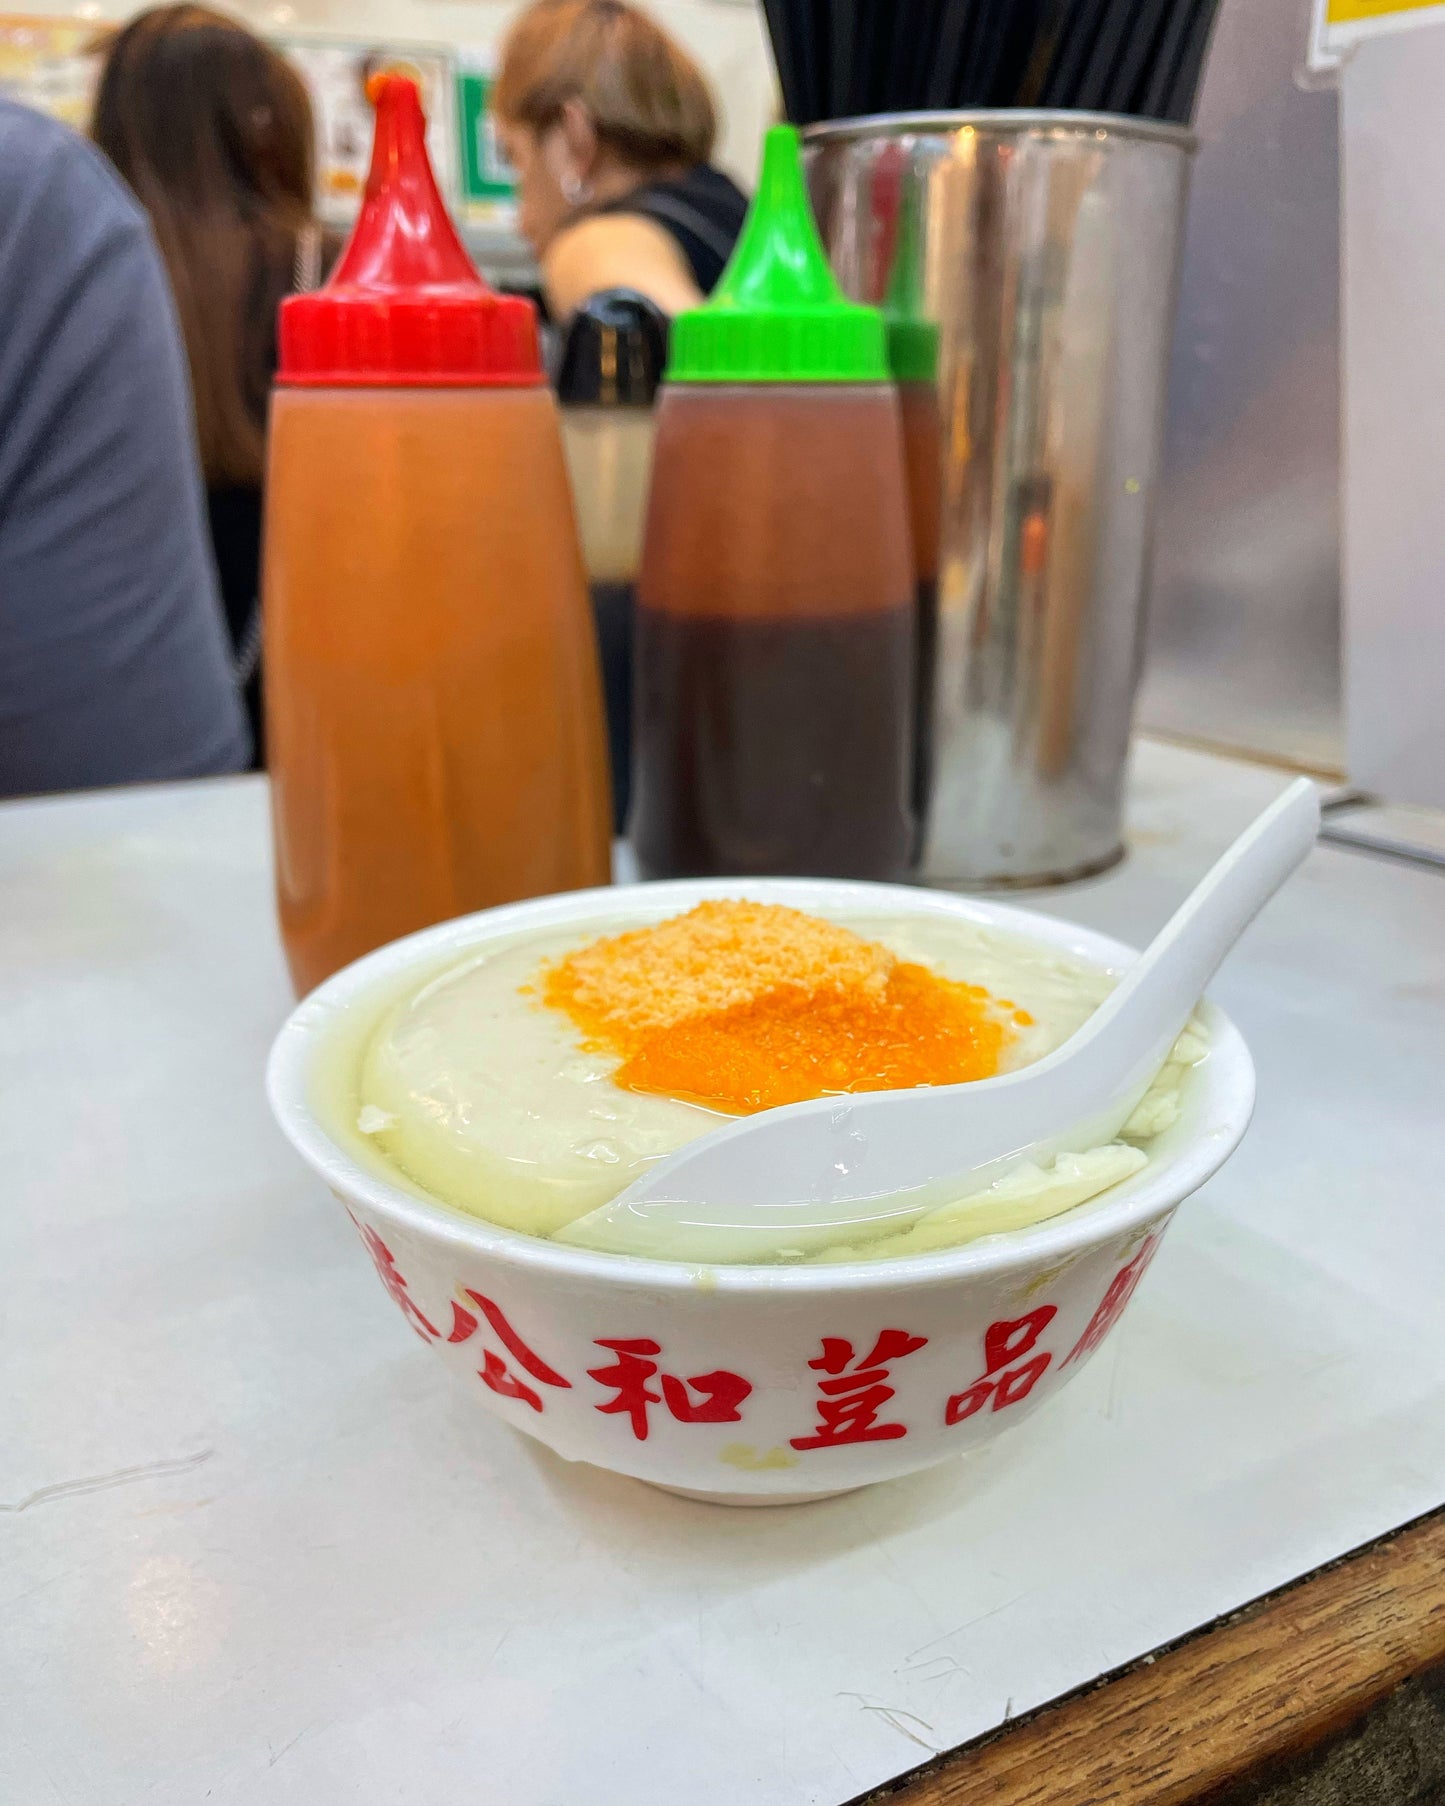 Explore Sham Shui Po Michelin Food Tour